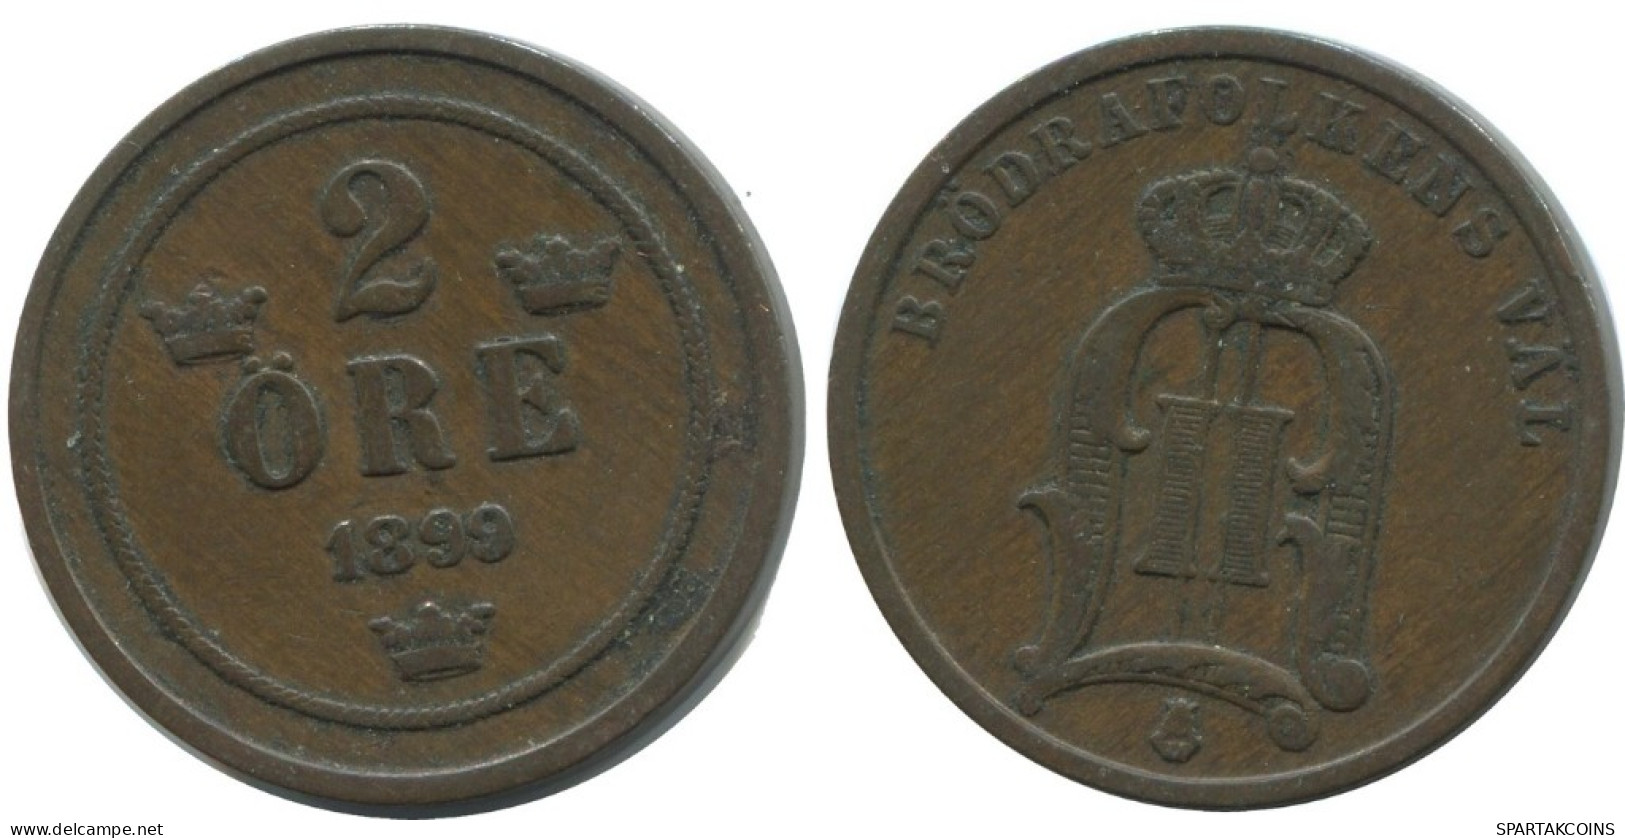 2 ORE 1899 SWEDEN Coin #AC963.2.U.A - Sweden